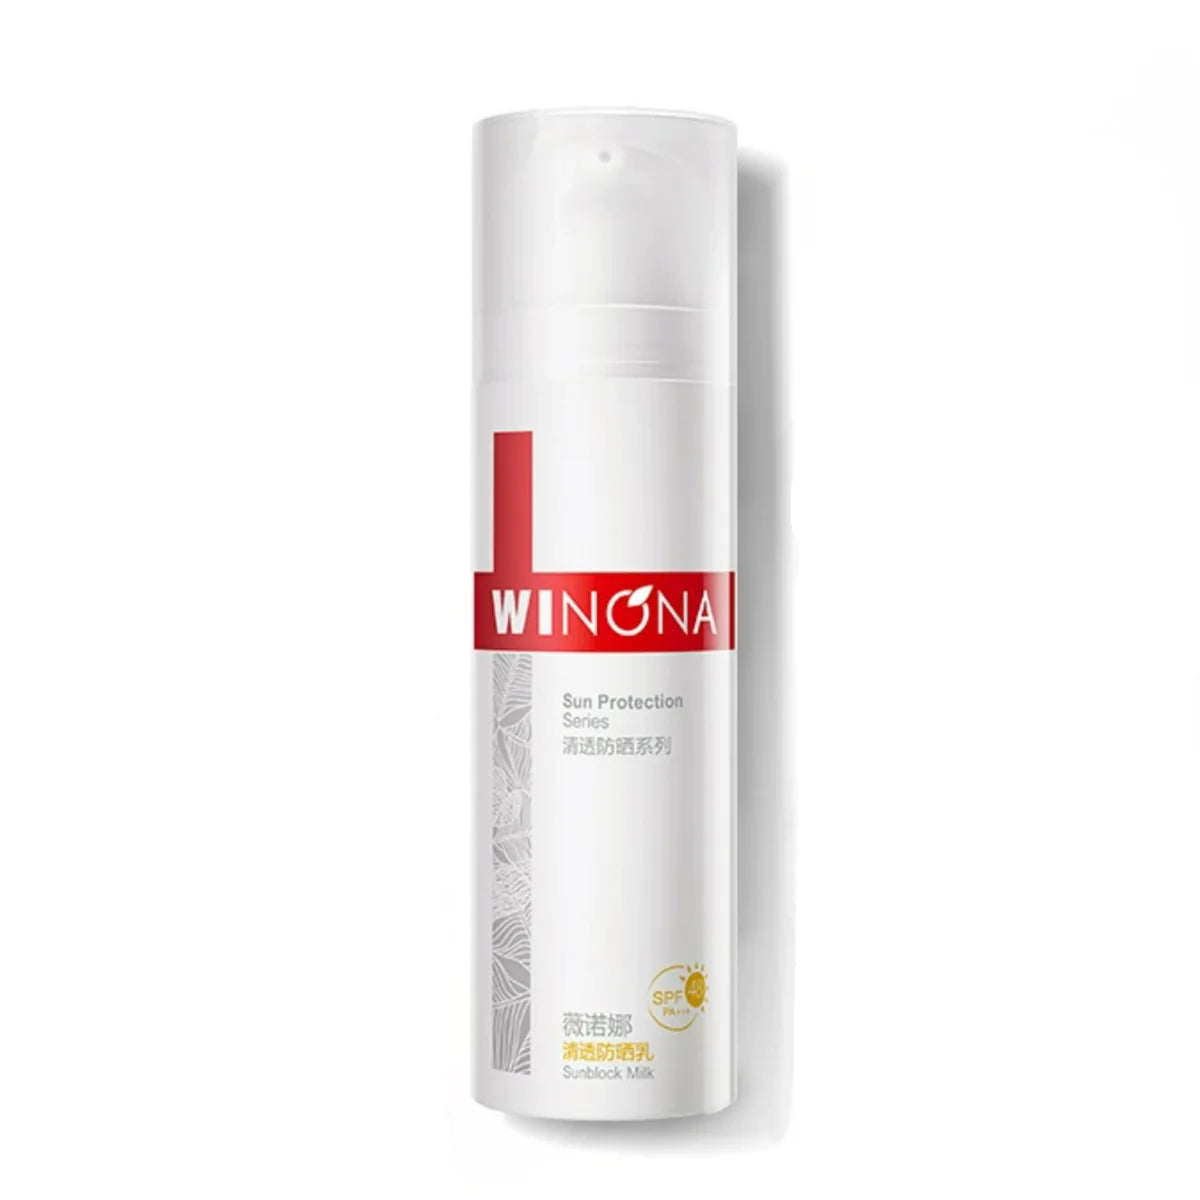 WINONA Sunblock Milk Cream Sunscreen